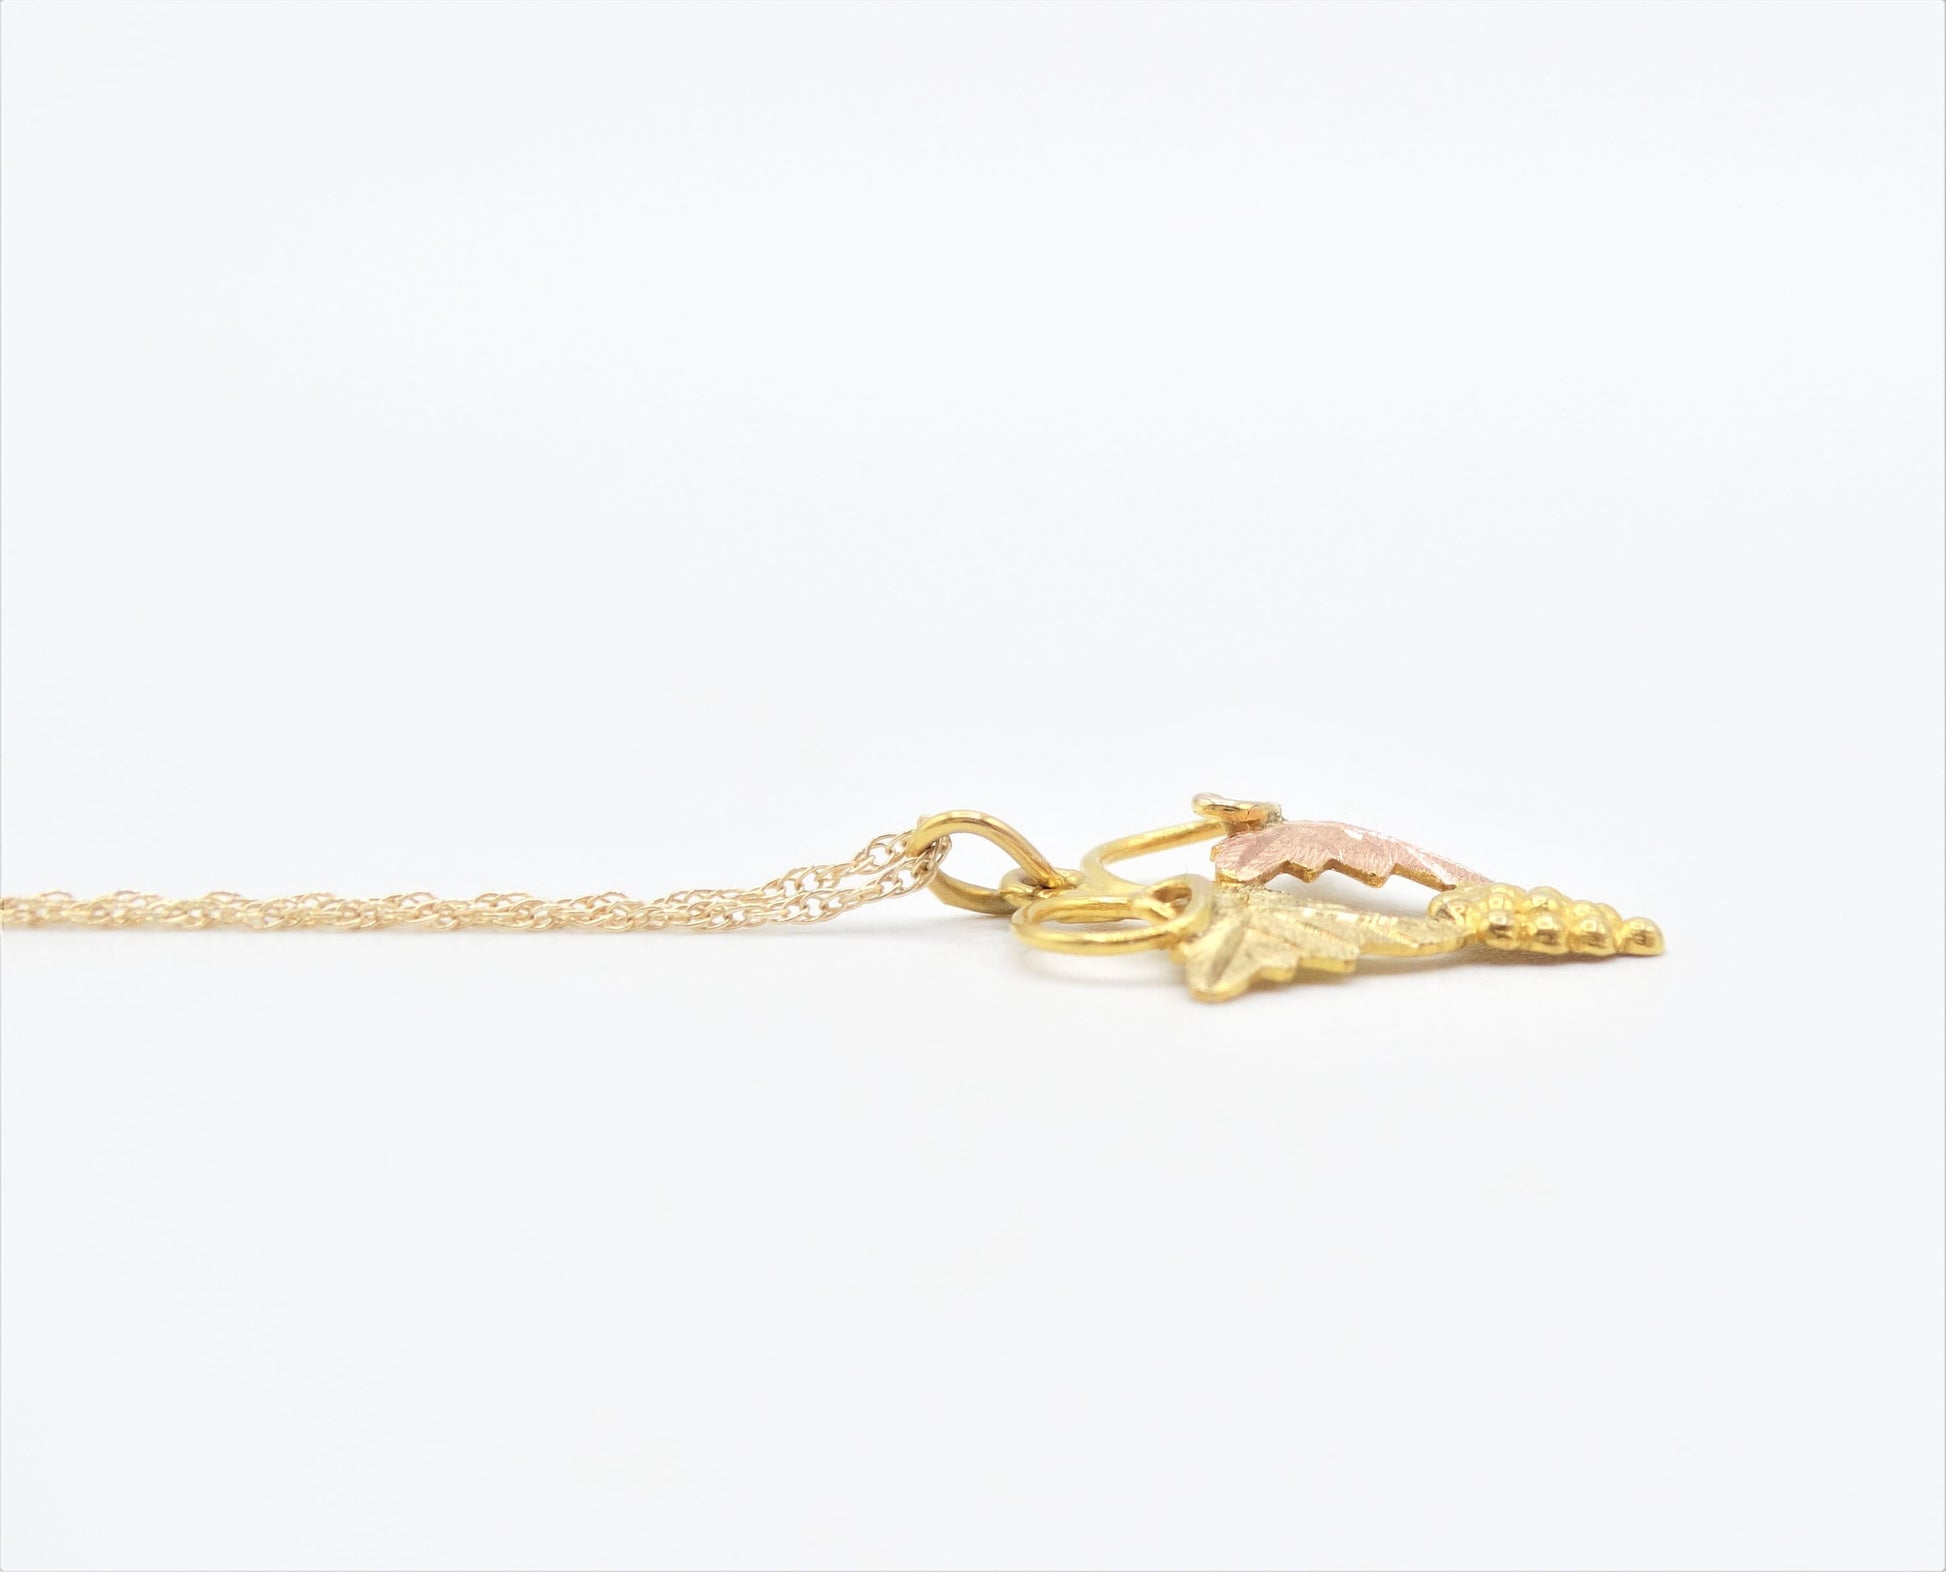 1.3g, Vintage 14K Gold Black Hills Gold Duo Tone Necklace, Boho Minimalist Pendant Necklace, Everyday Jewelry